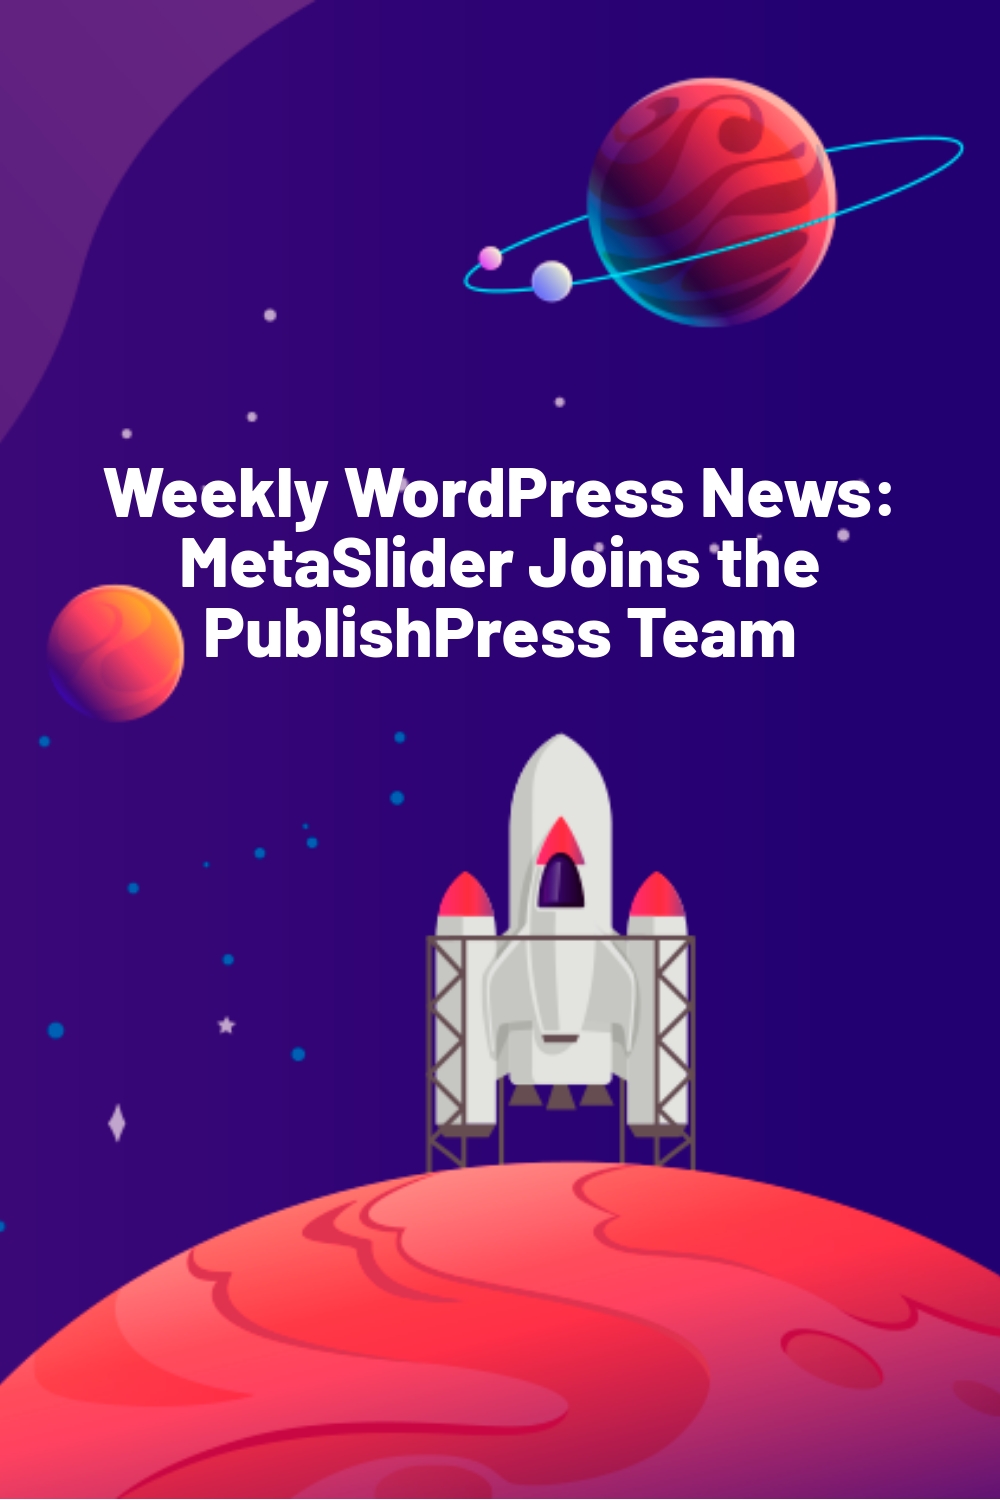 Weekly WordPress News:  MetaSlider Joins the PublishPress Team